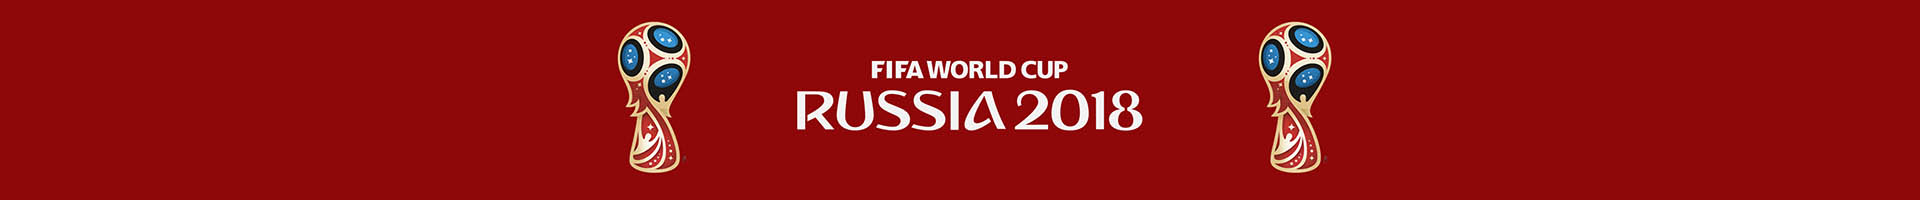 FIFA WORLD CUP Russia 2018